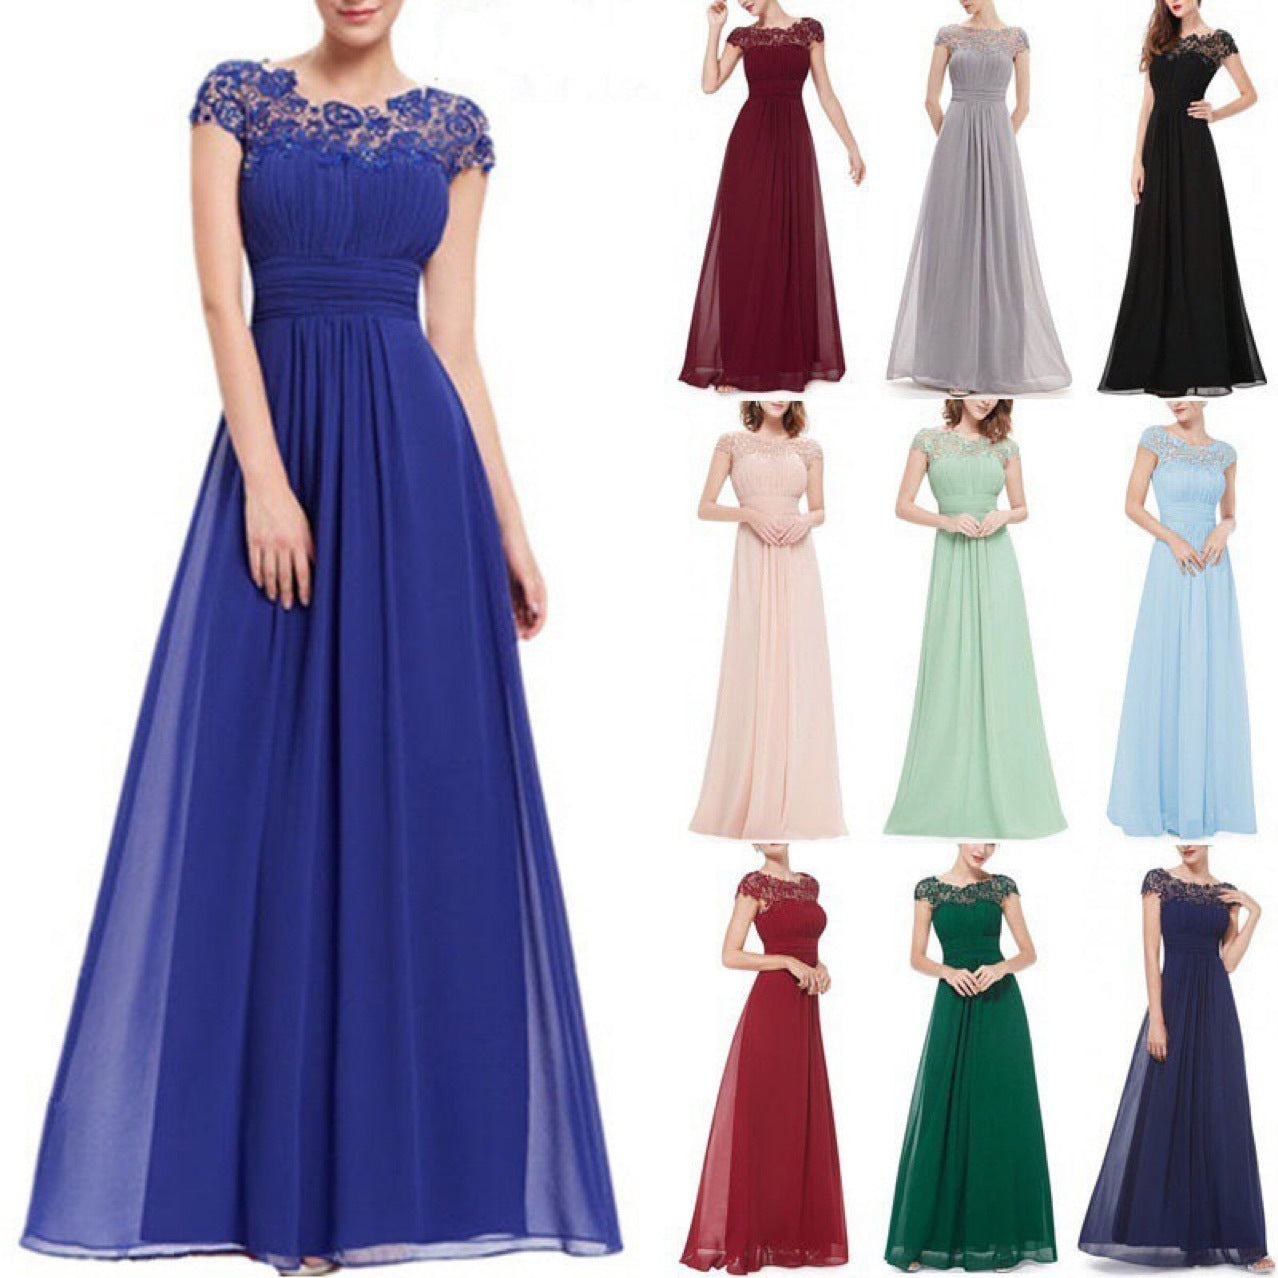 Elegant Women Long Lace Dresses-Dresses-Red-S-Free Shipping Leatheretro